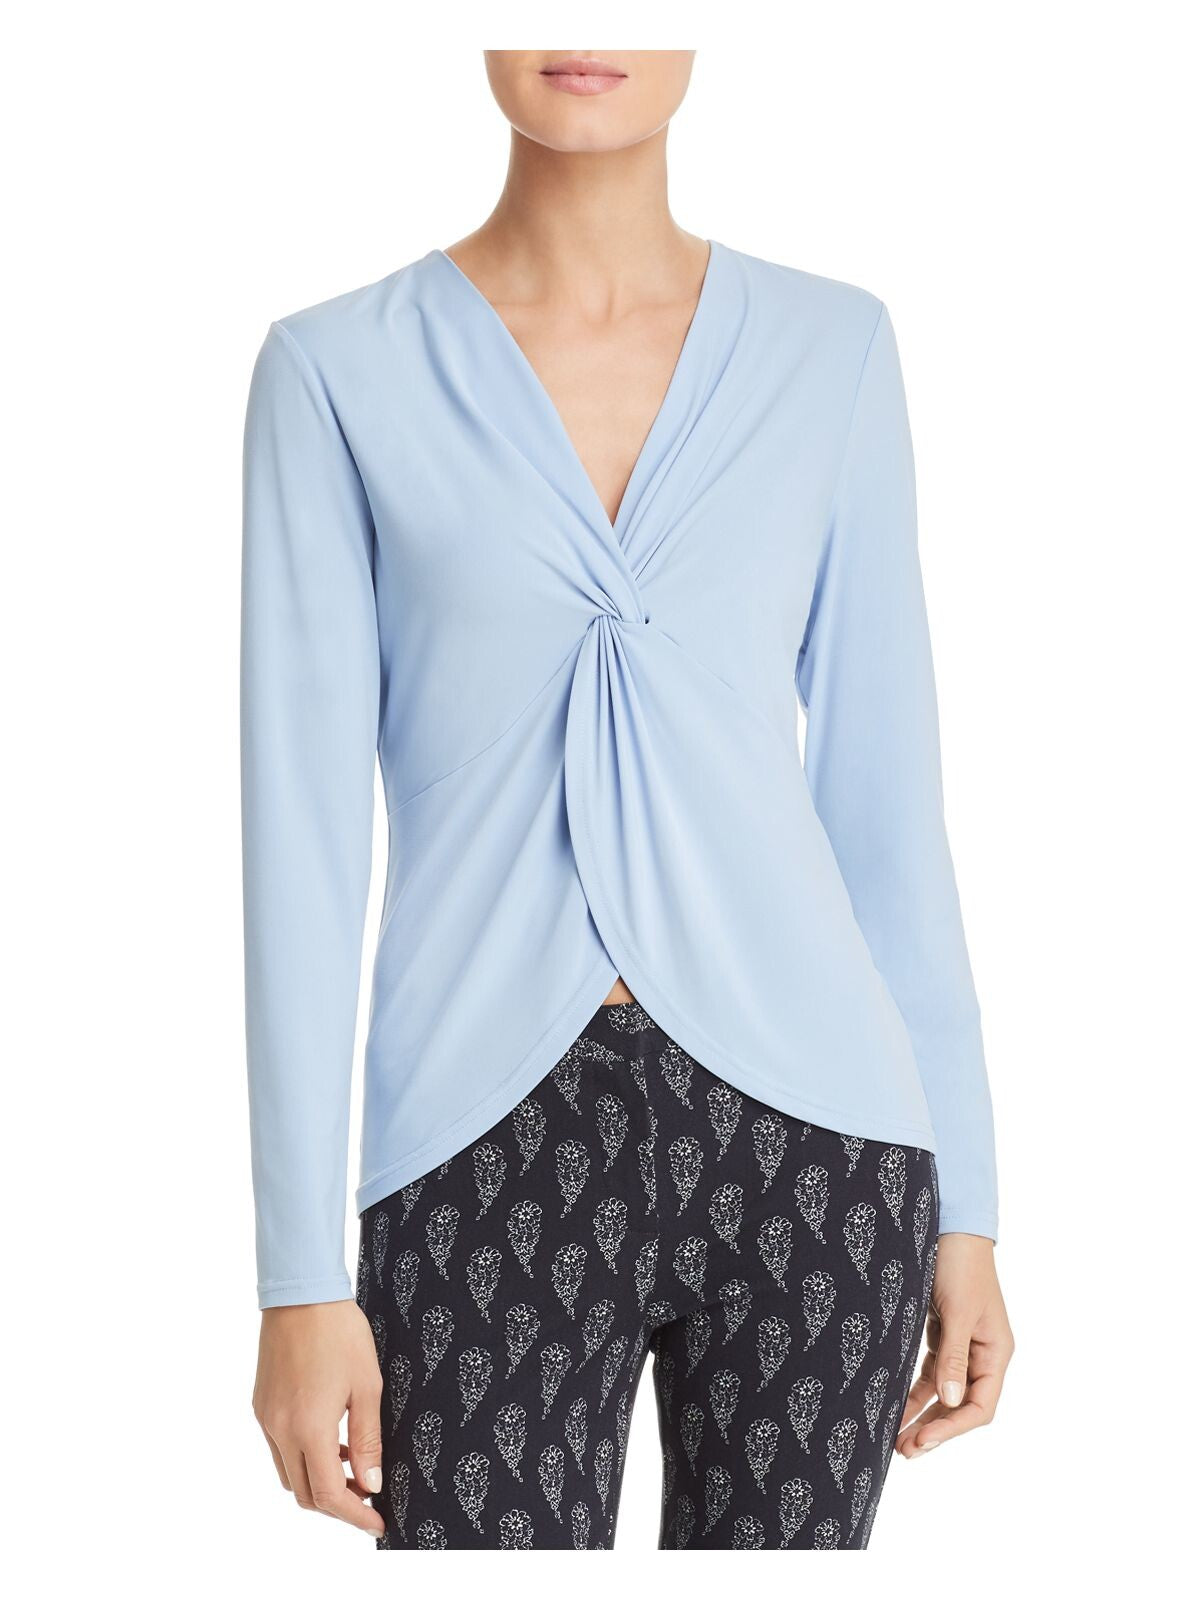 LE GALI Womens Light Blue Long Sleeve V Neck Blouse Party Top Plus Size: 2XL